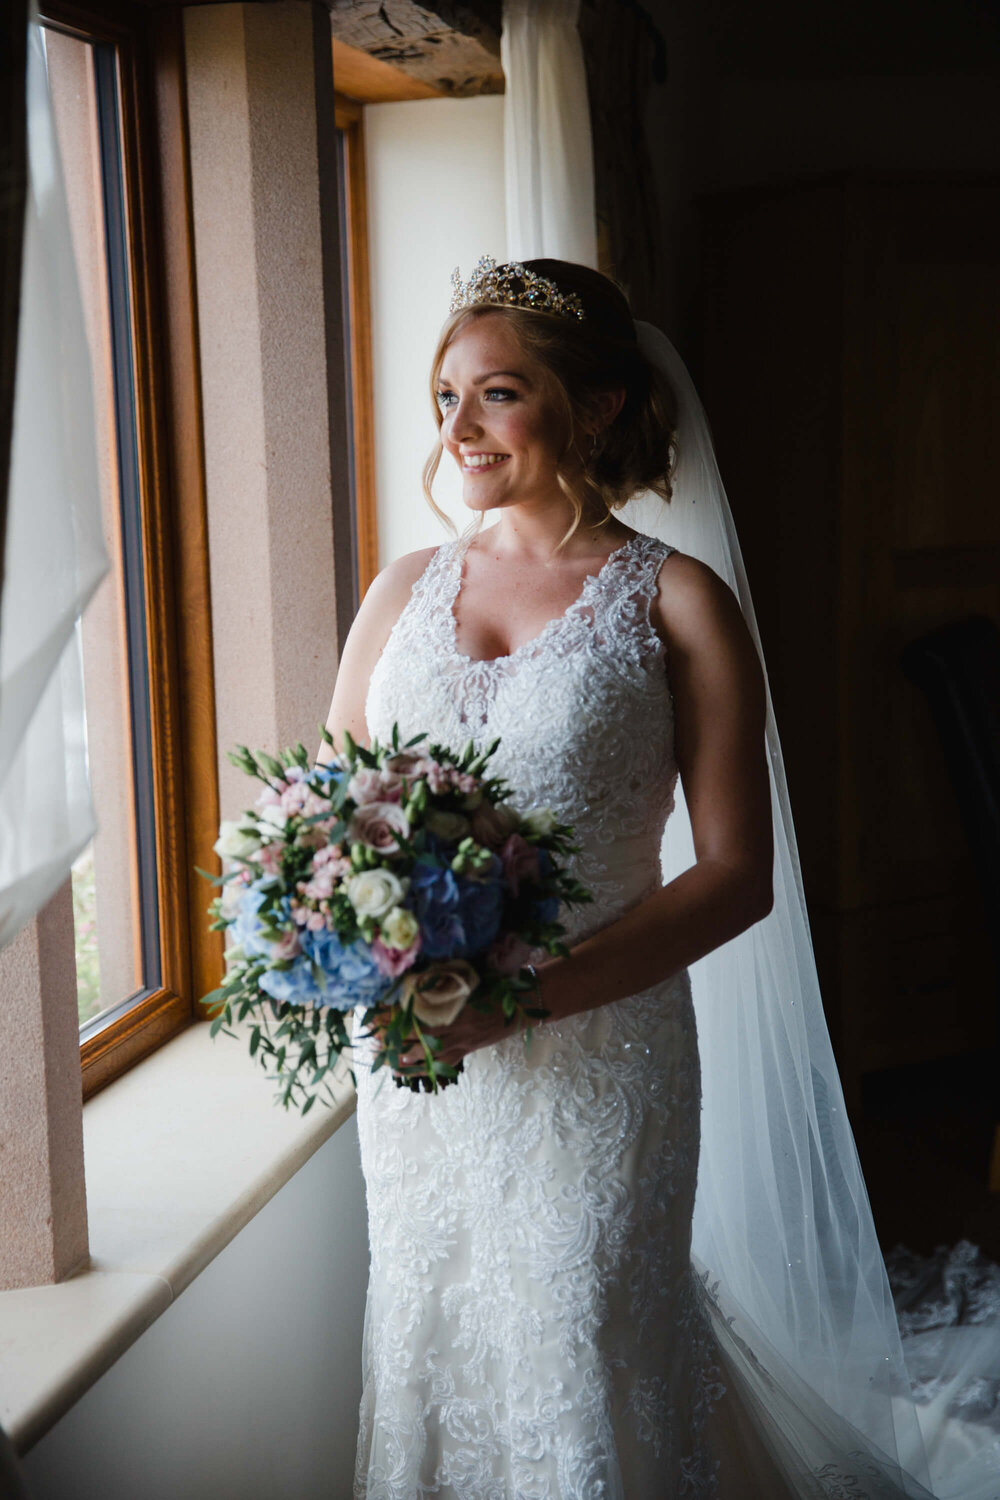 bride holding bouquet for portrait in window